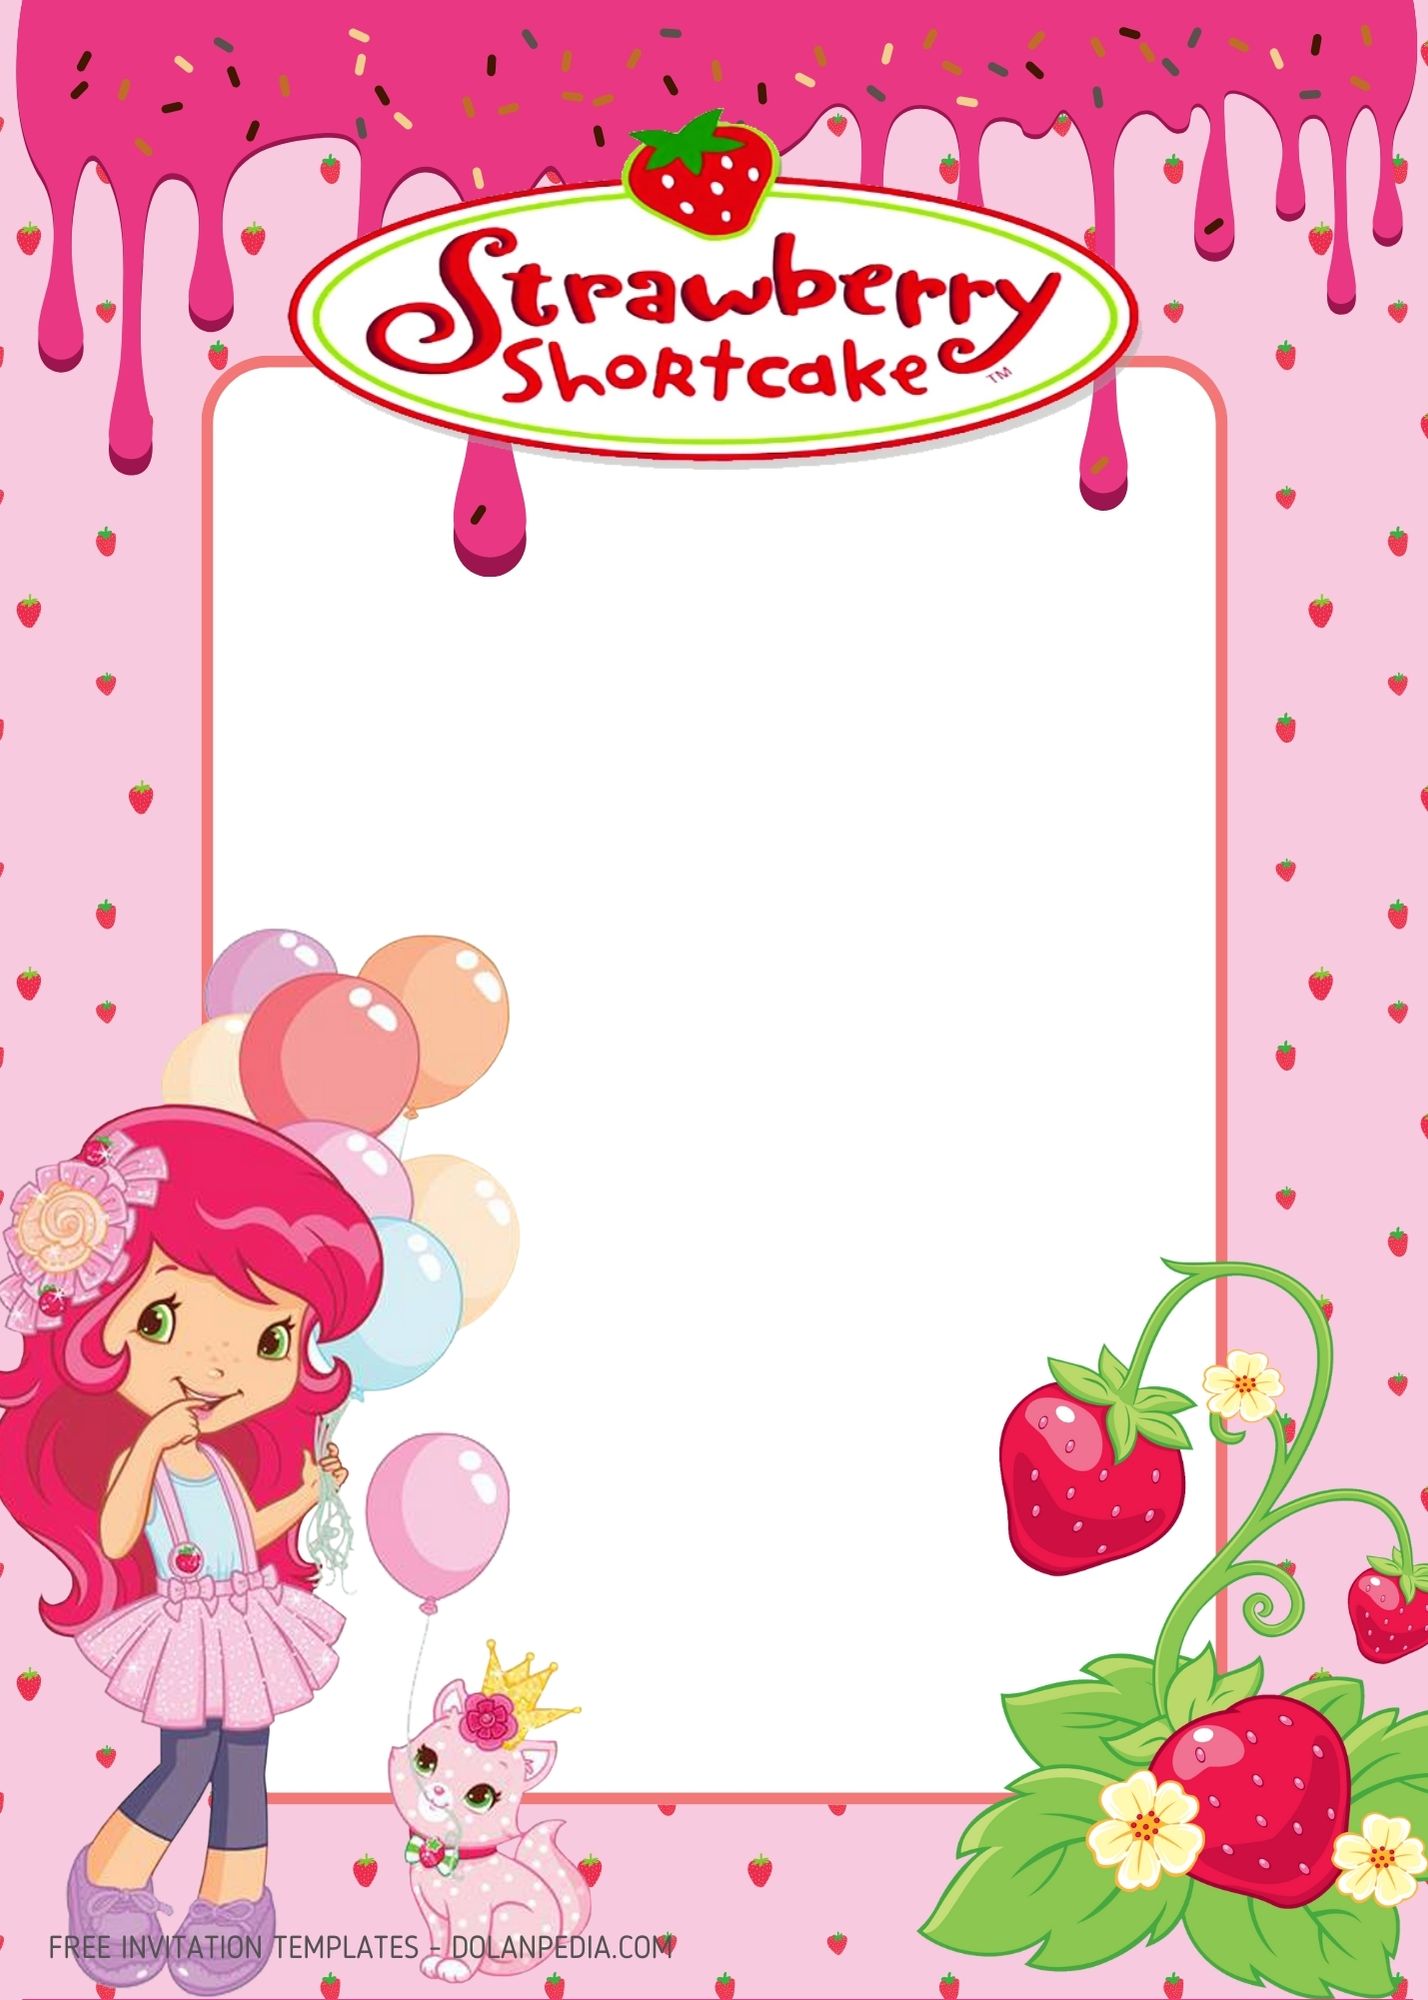 FREE Strawberry Shortcake Baking Party Invitation Templates